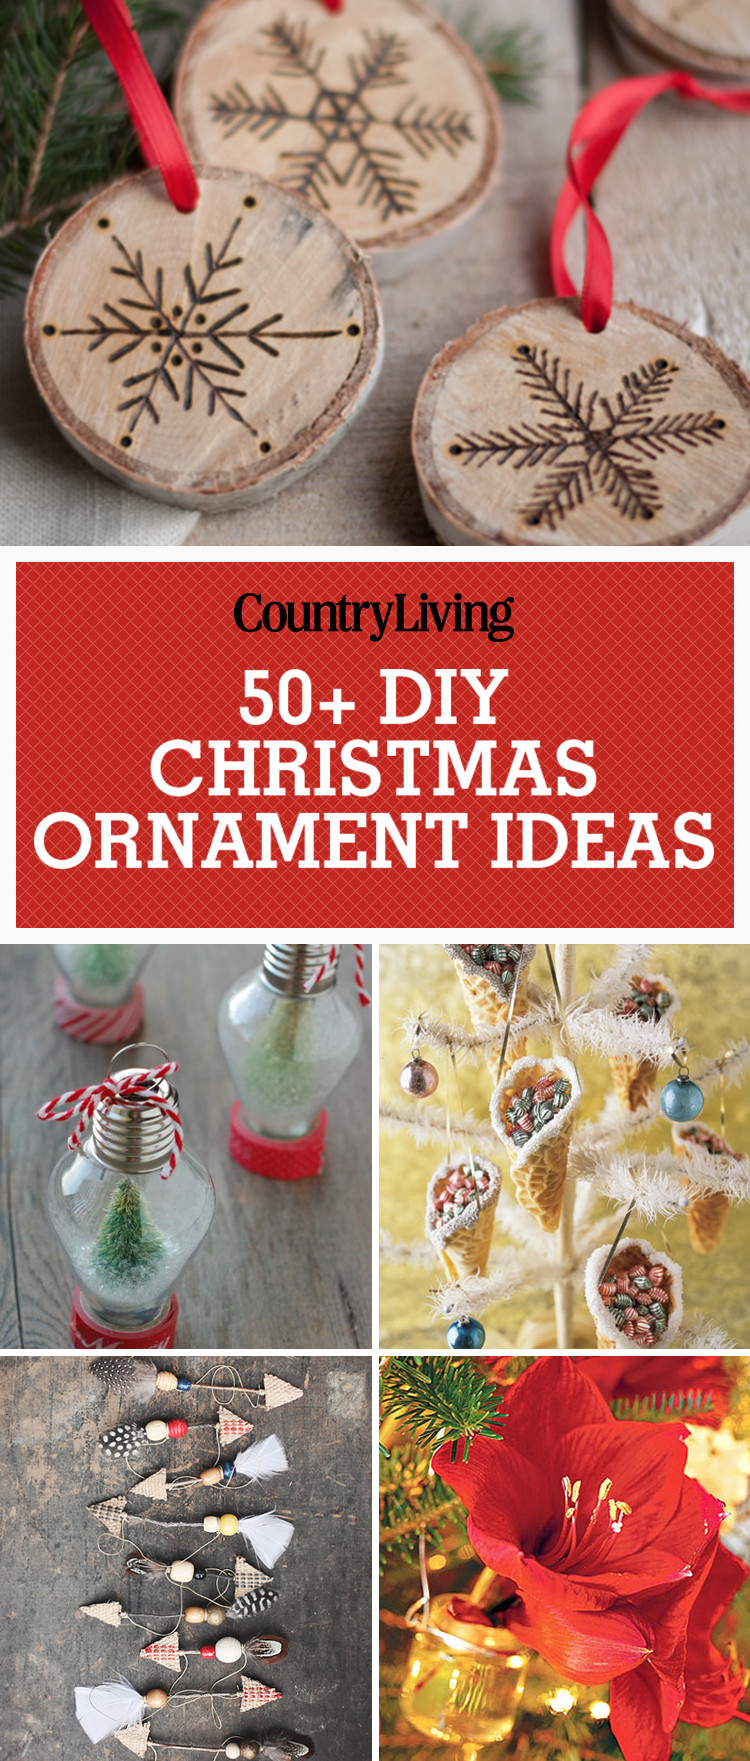 Christmas Ornament DIY Ideas
 55 Homemade Christmas Ornaments DIY Crafts with